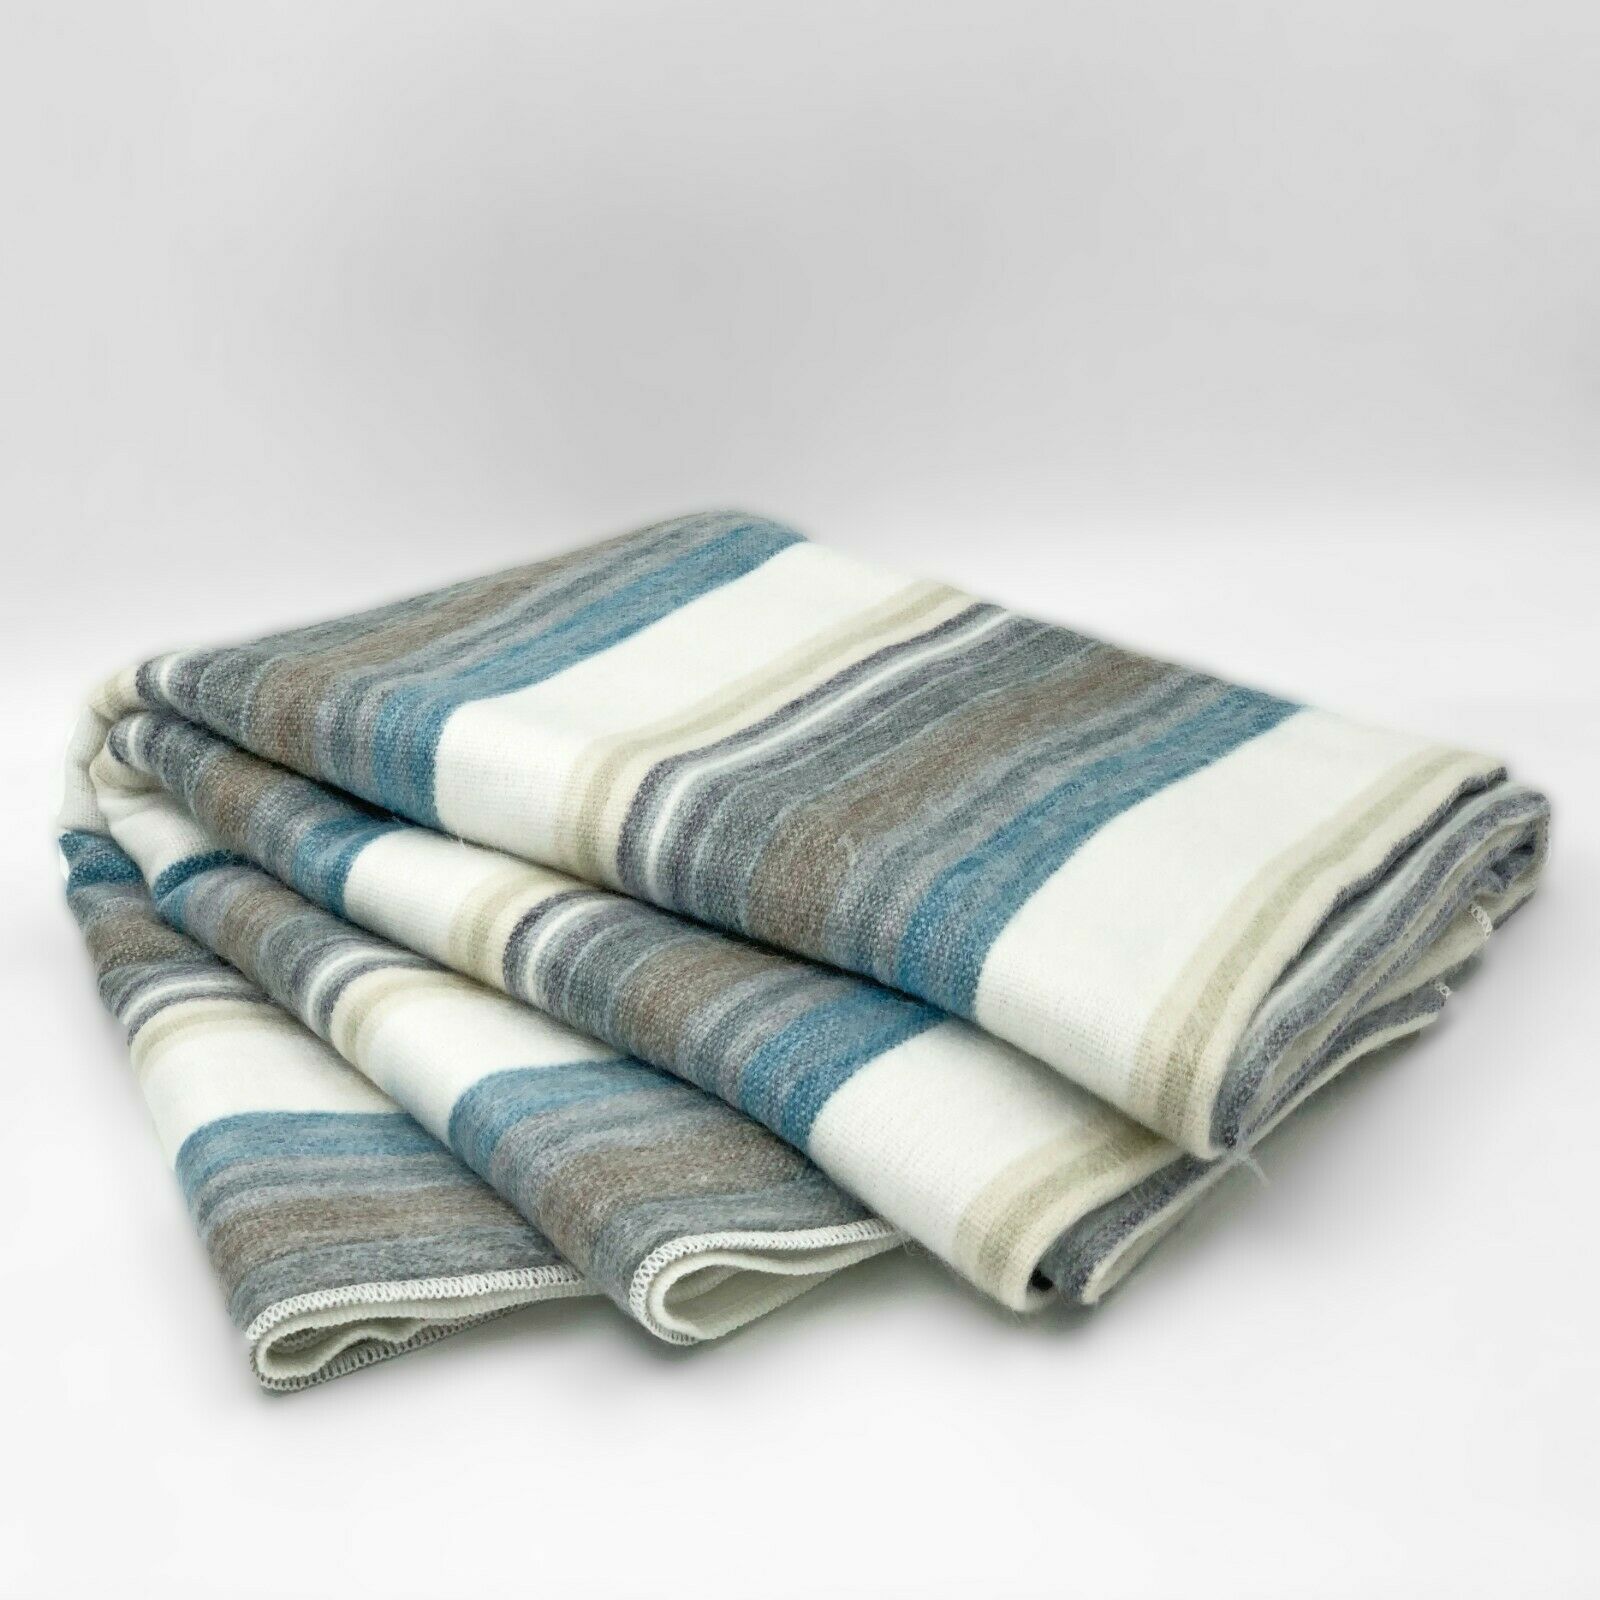 Chuquipogyo - Baby Alpaca Wool Throw Blanket / Sofa Cover - Queen 95" x 65" - multi colored thin stripes pattern